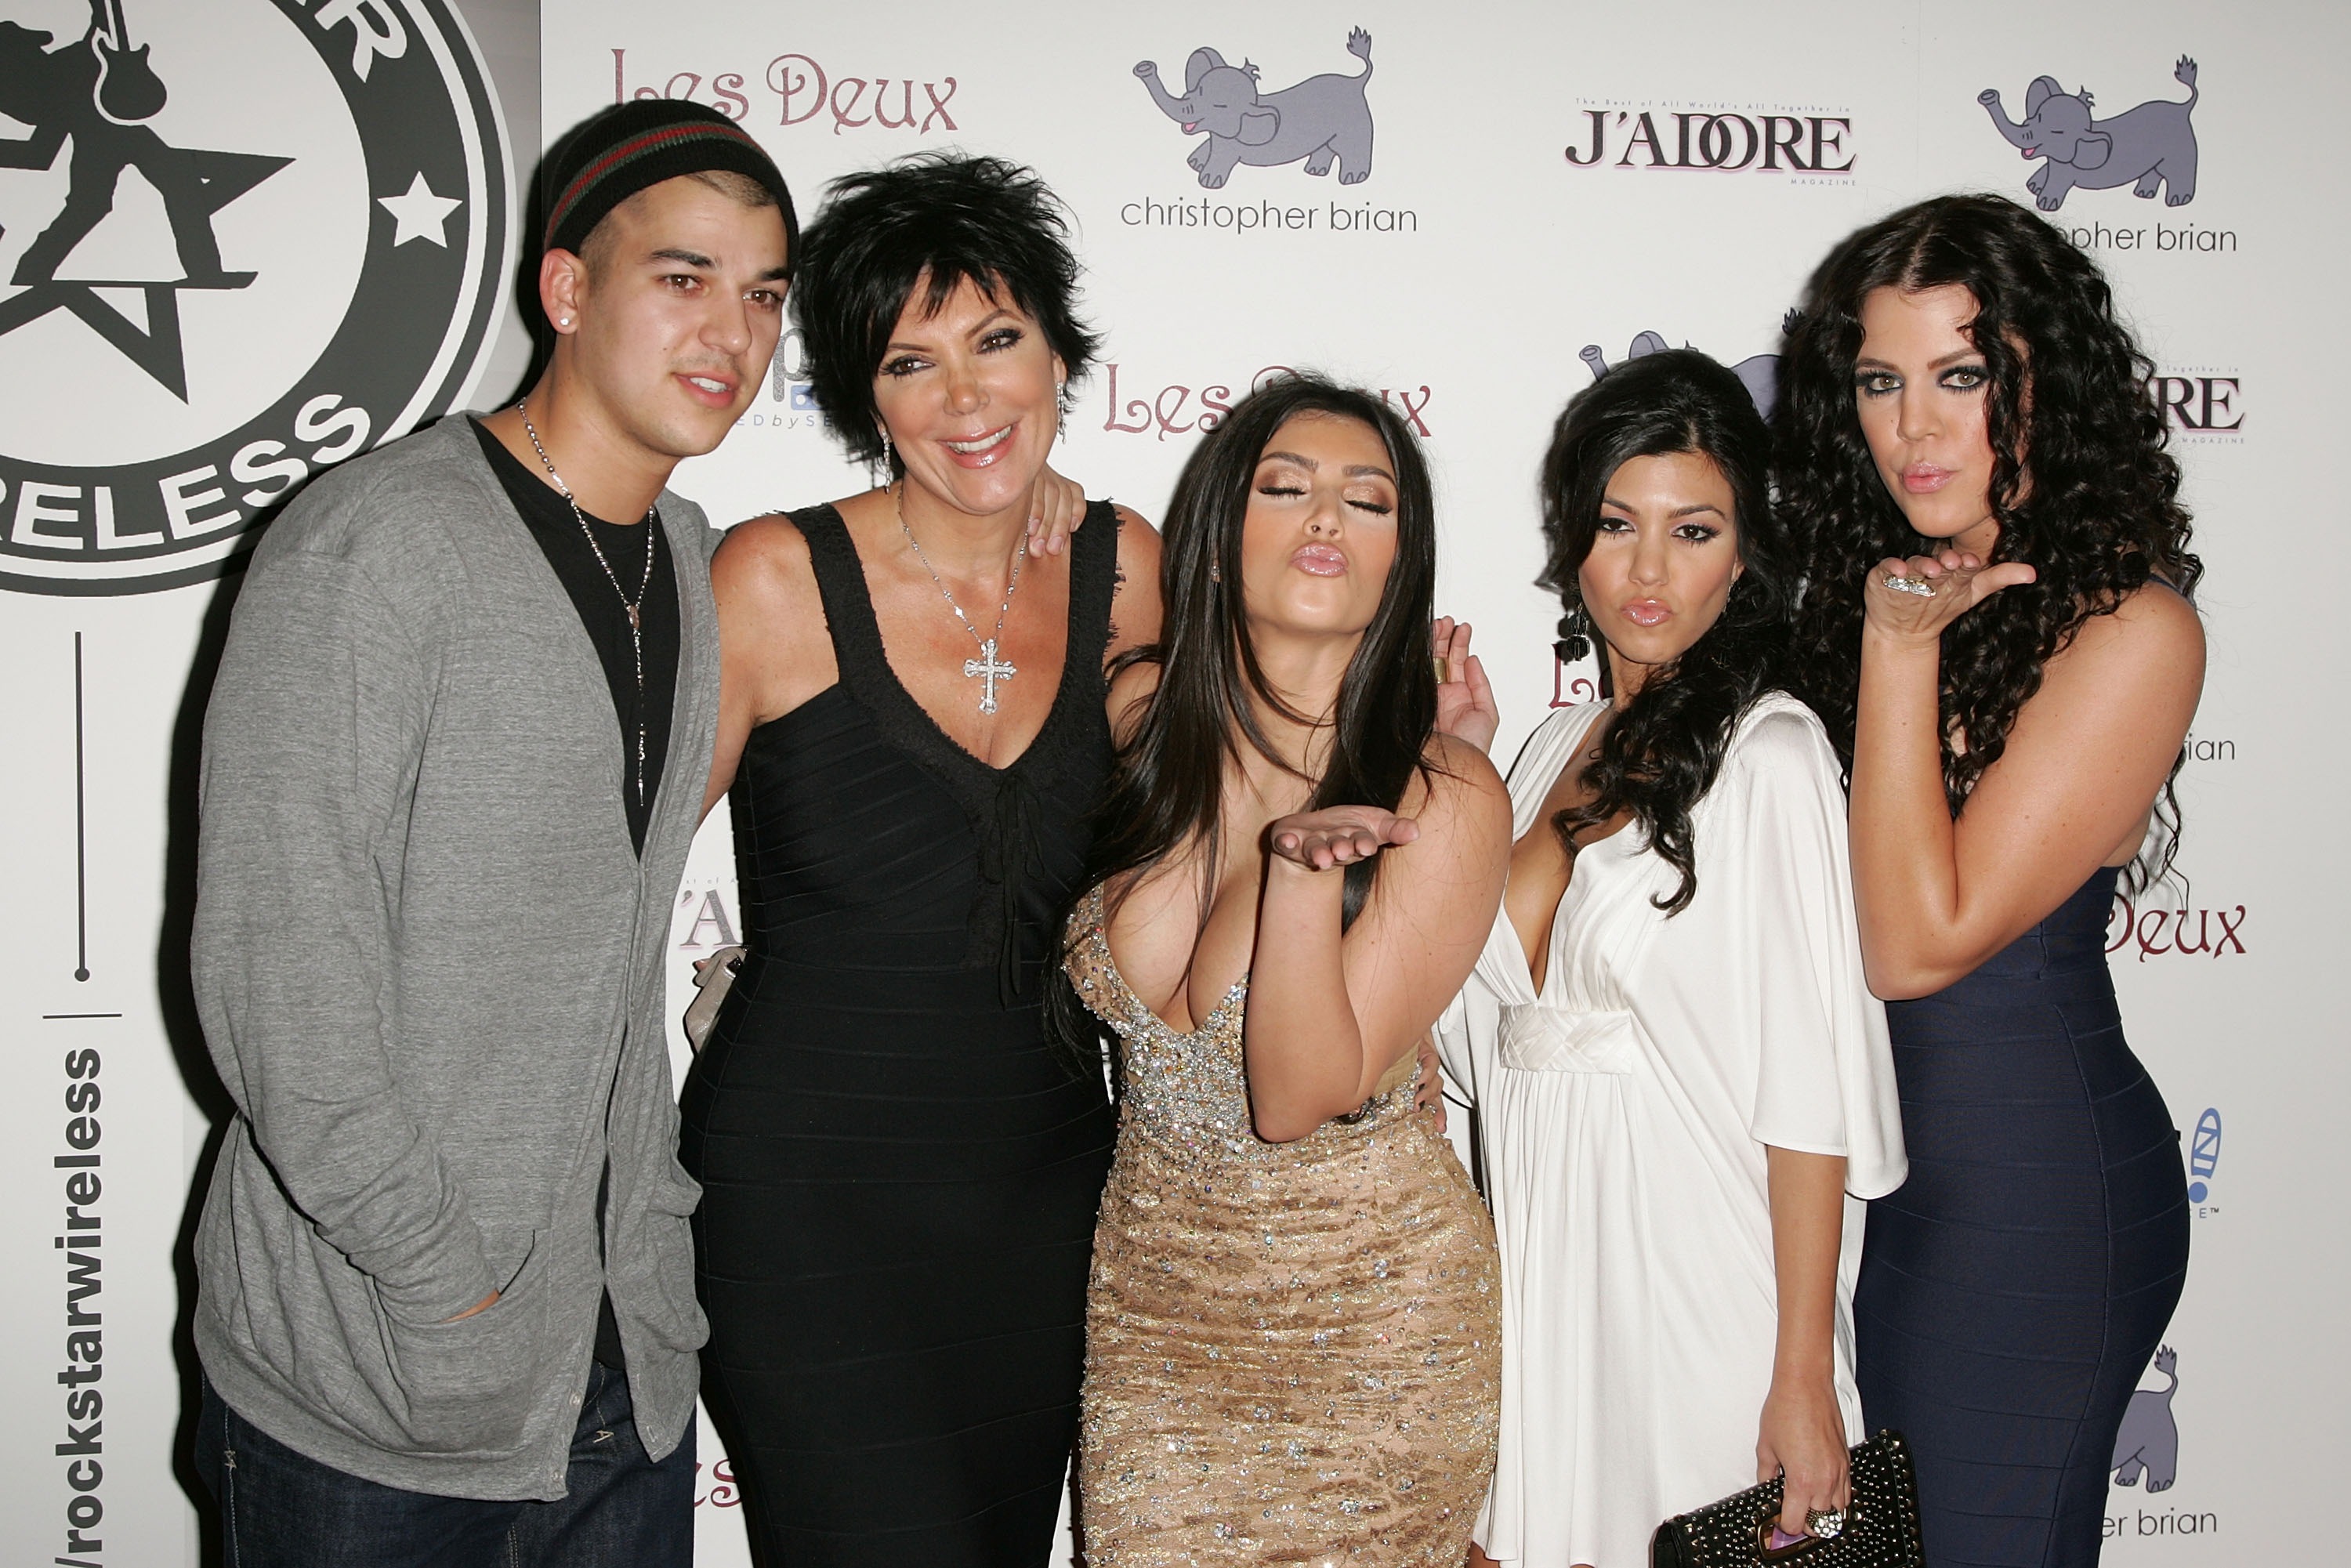 Kardashians React To “Keeping Up With The Kardashians” Finale